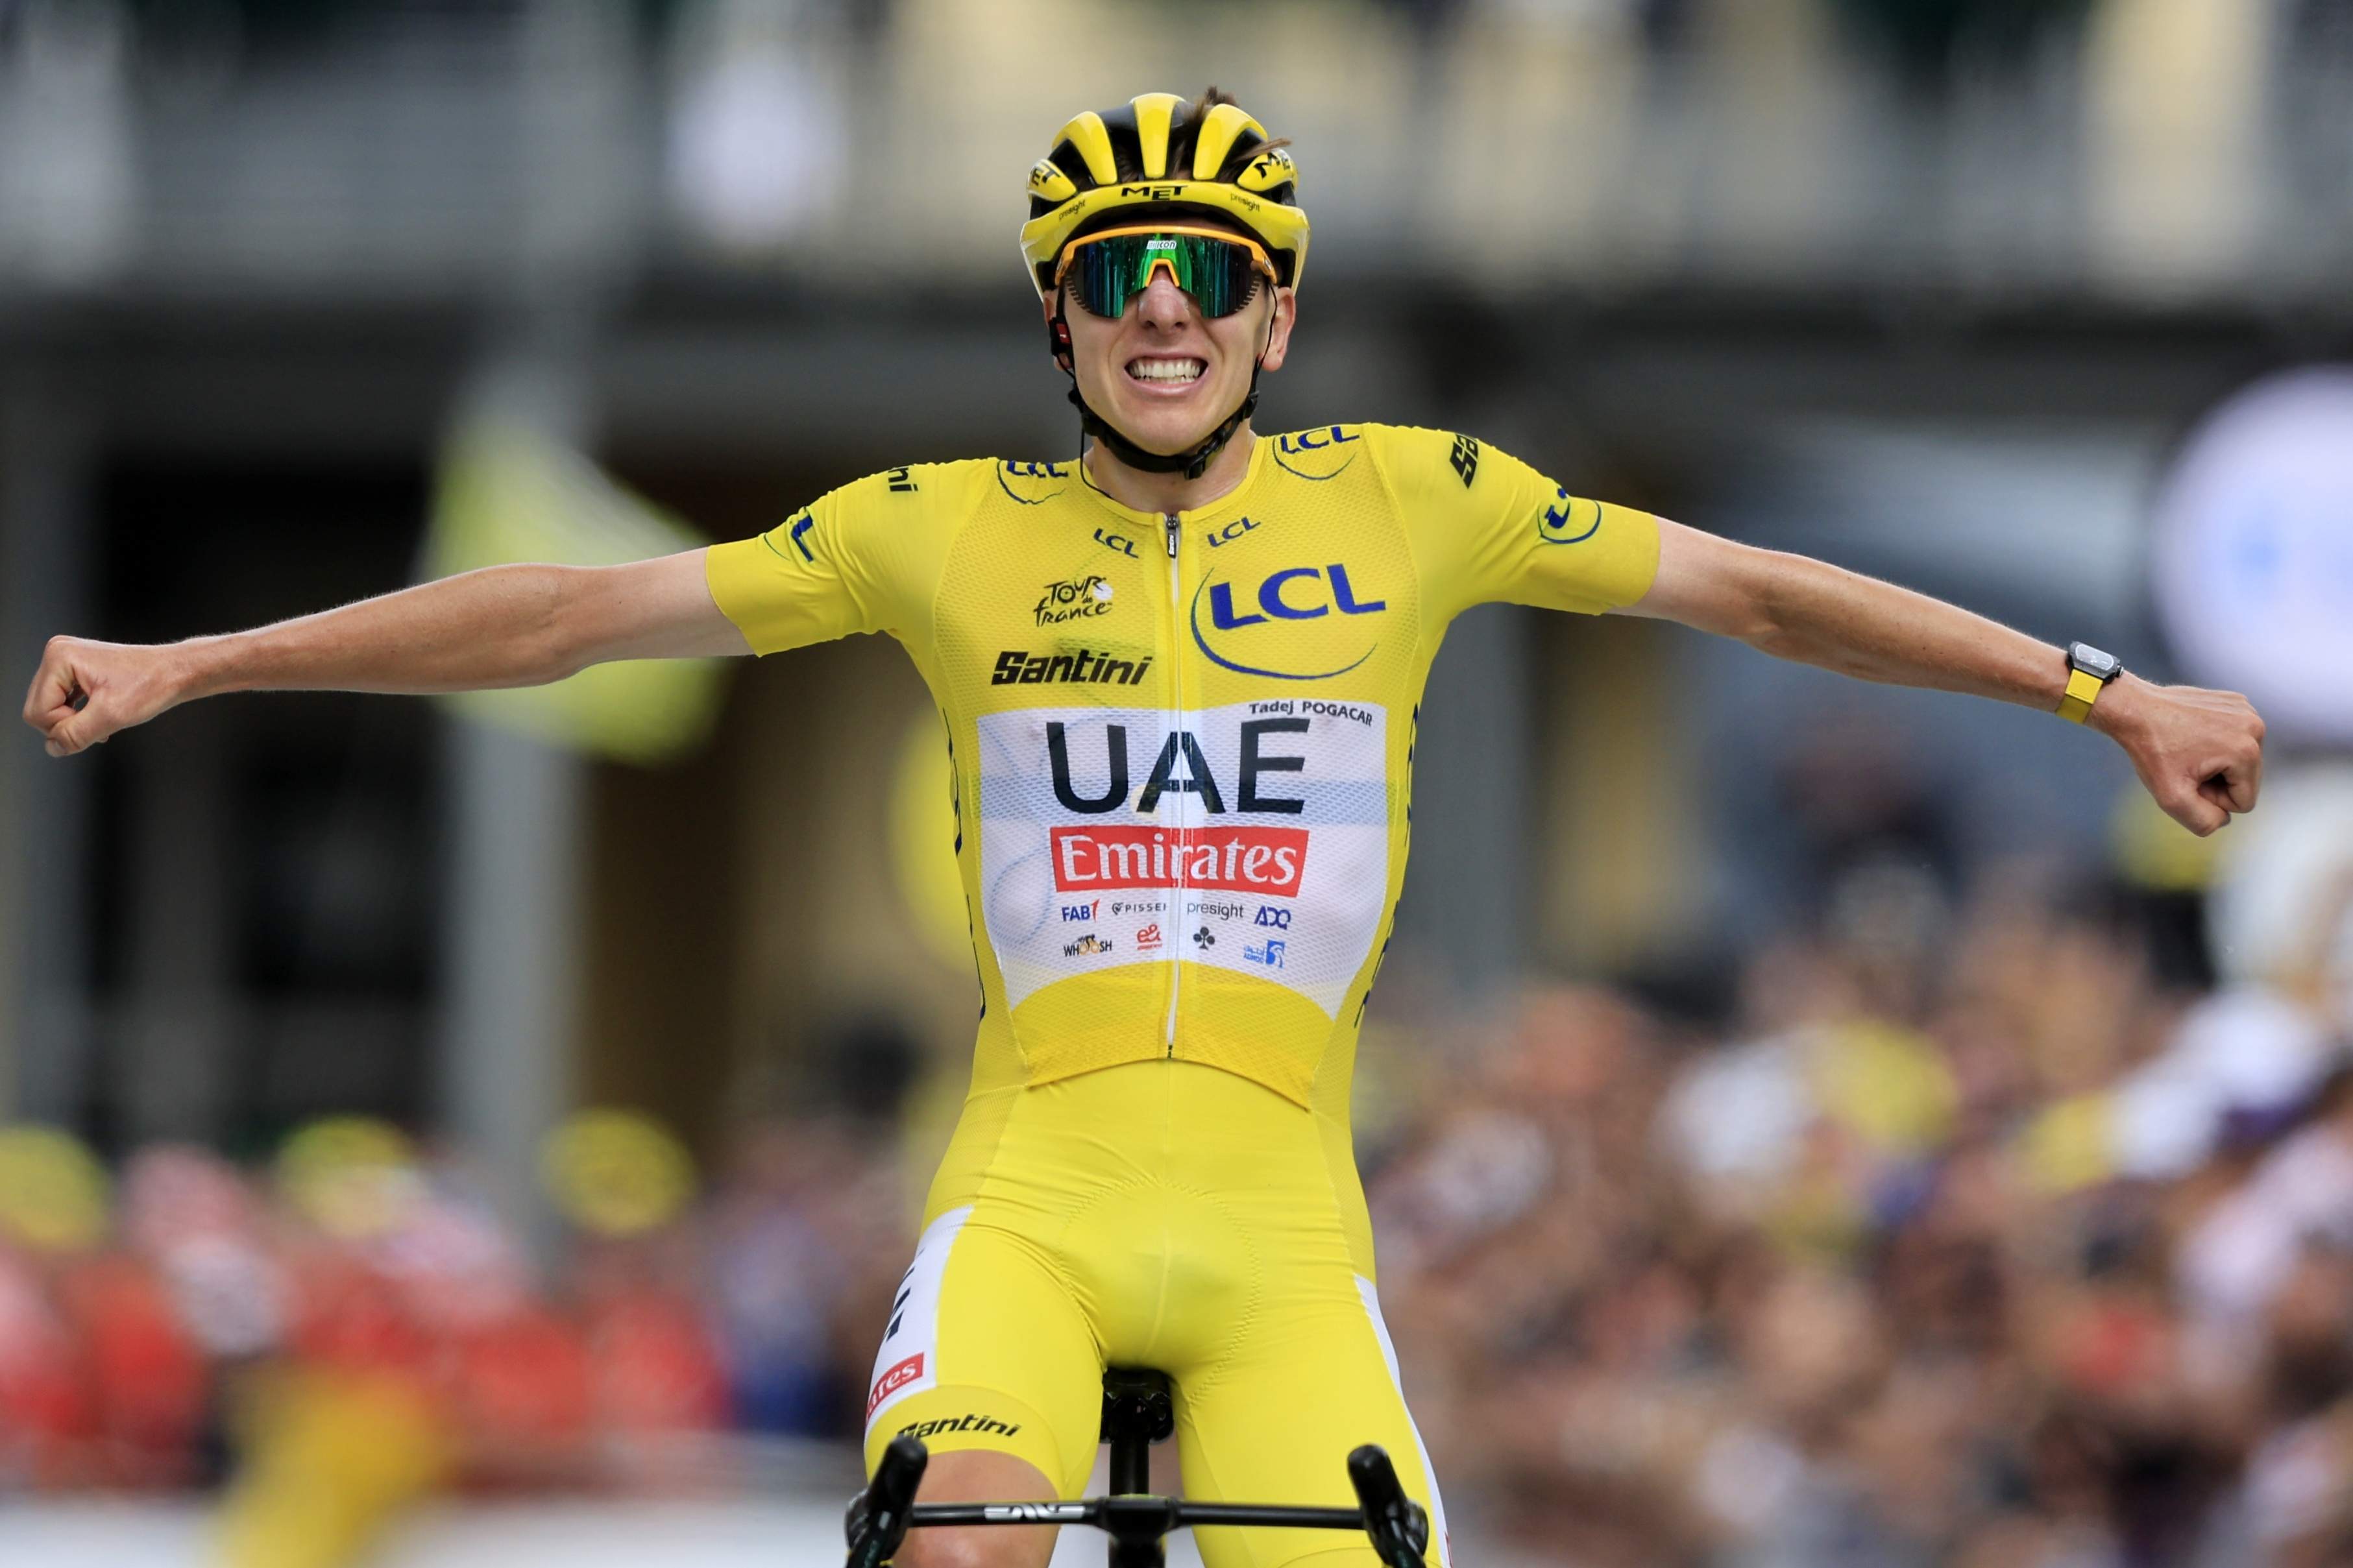 Pogačar guanya als Pirineus i encamina el seu tercer Tour de França